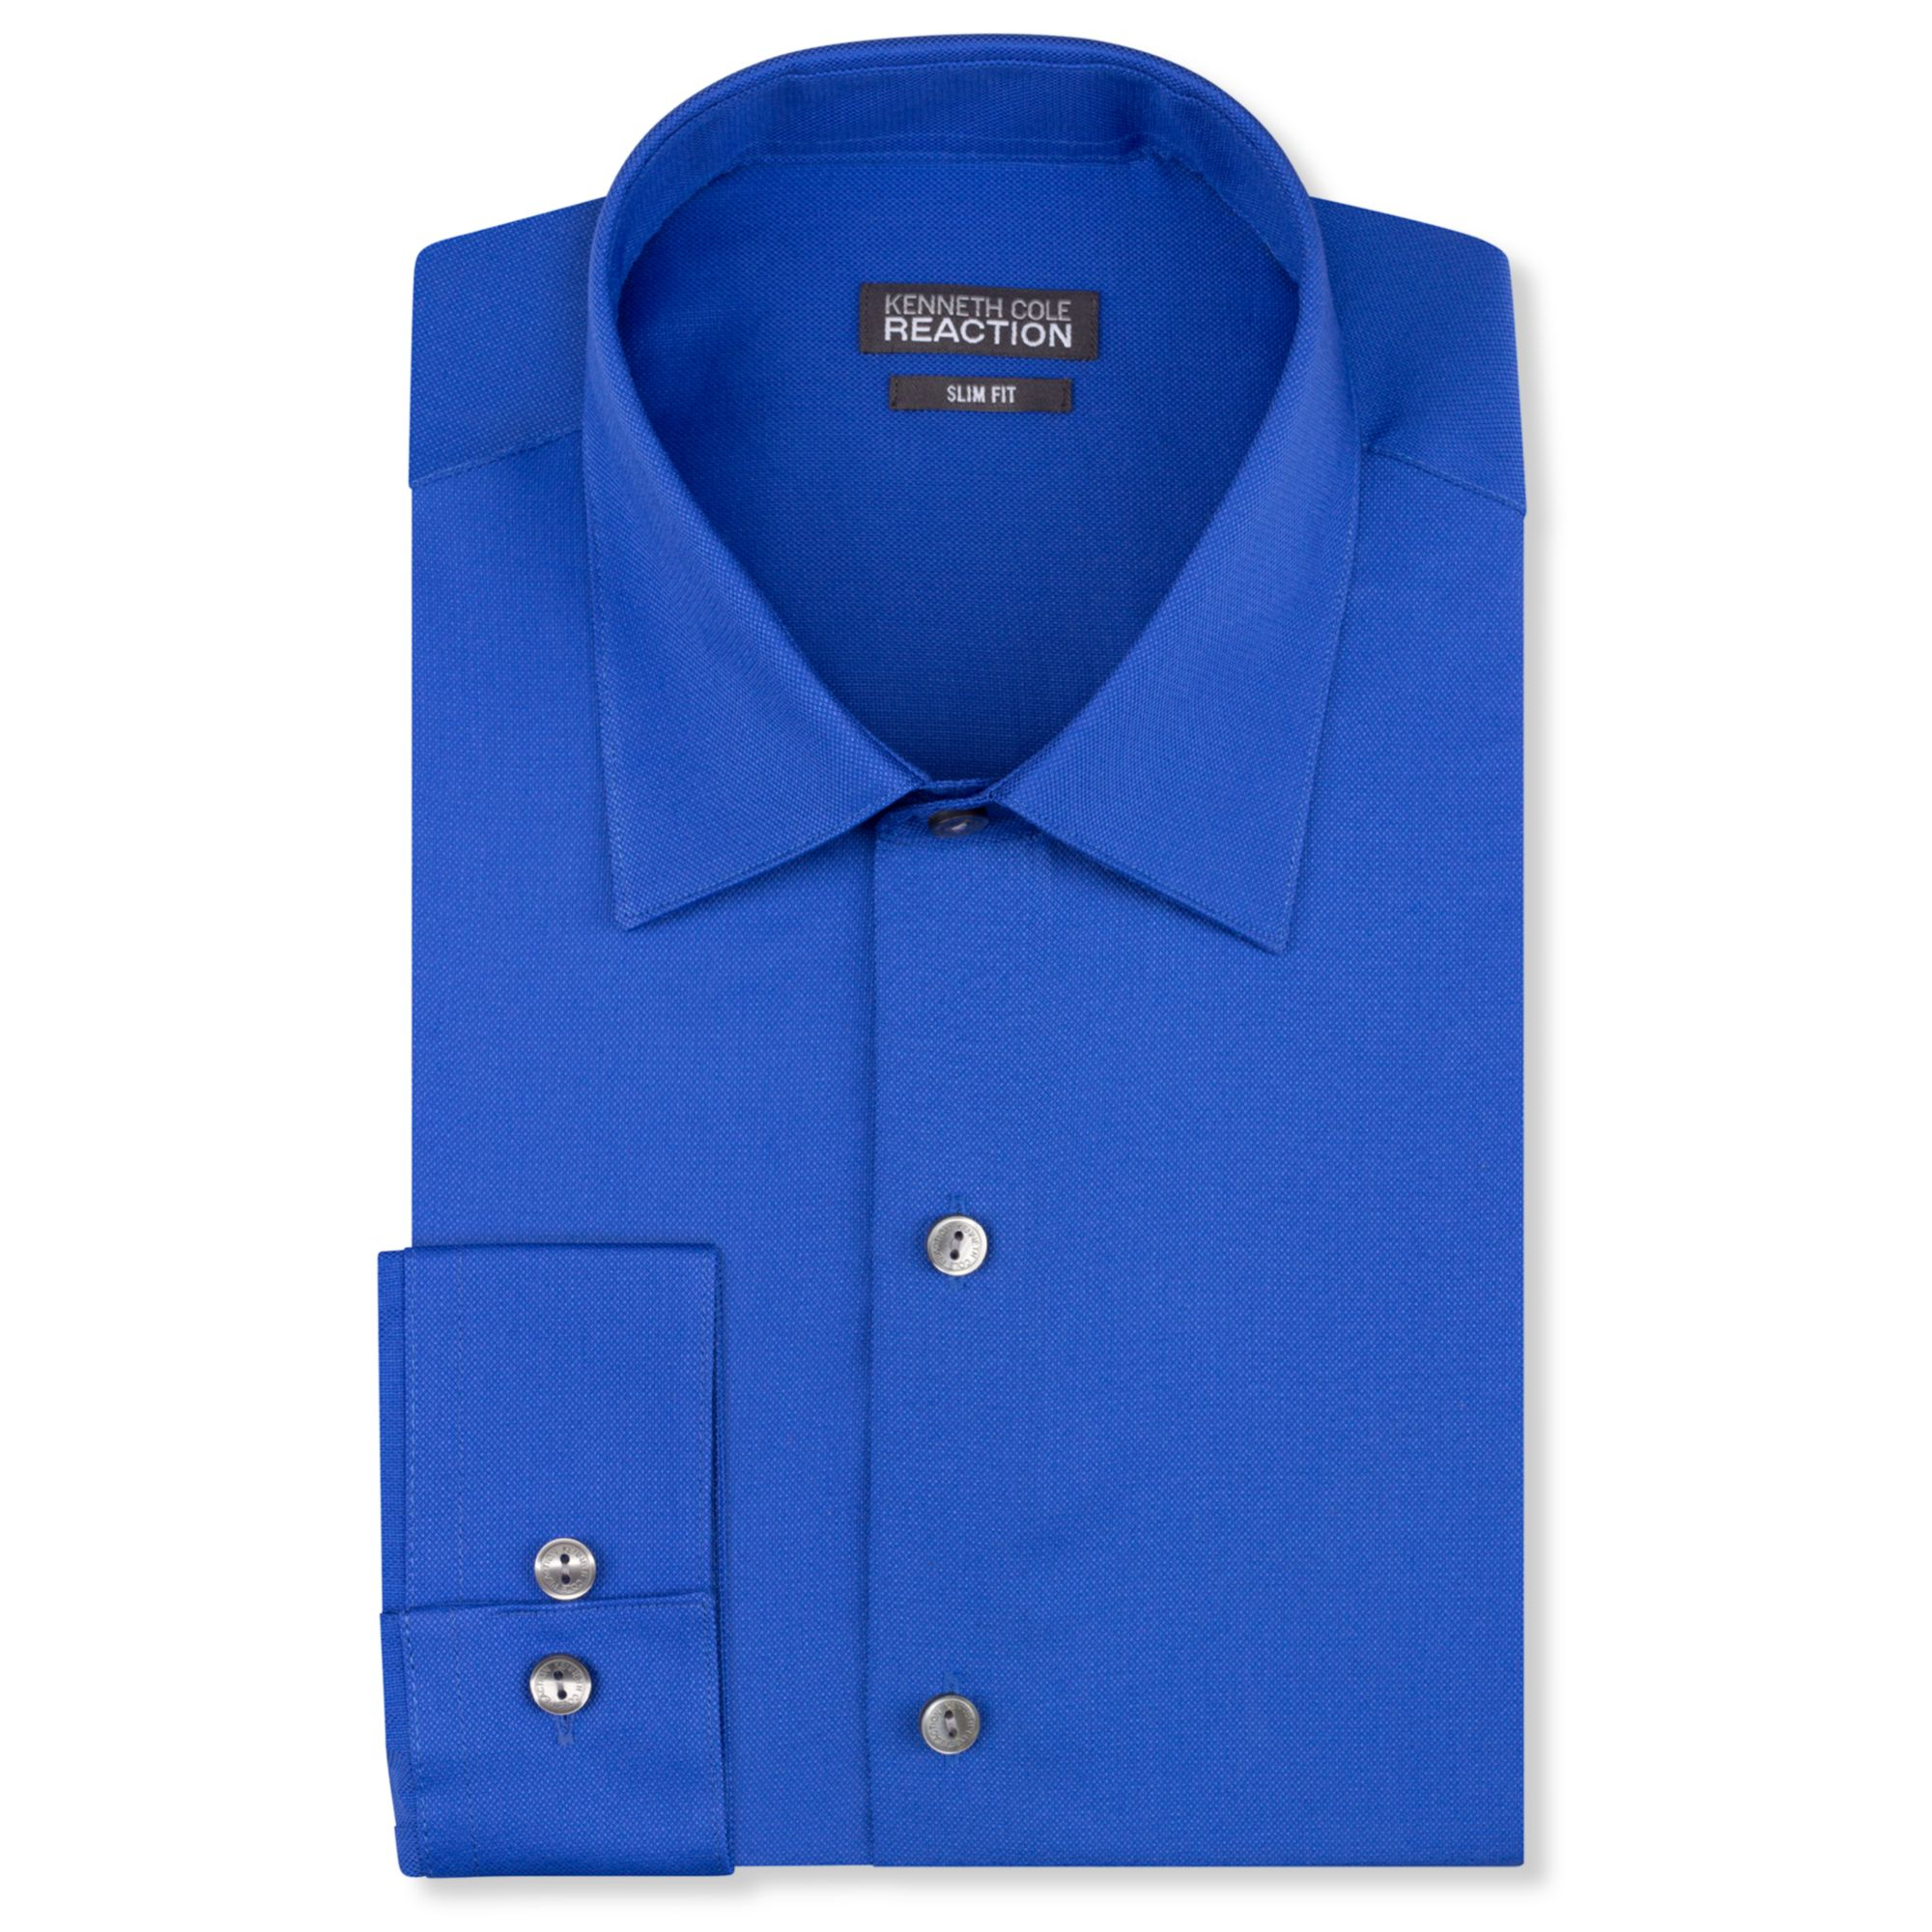 kenneth-cole-reaction-blue-slim-fit-royal-blue-solid-dress-shirt-product-1-17333079-0-812870064-normal.jpeg